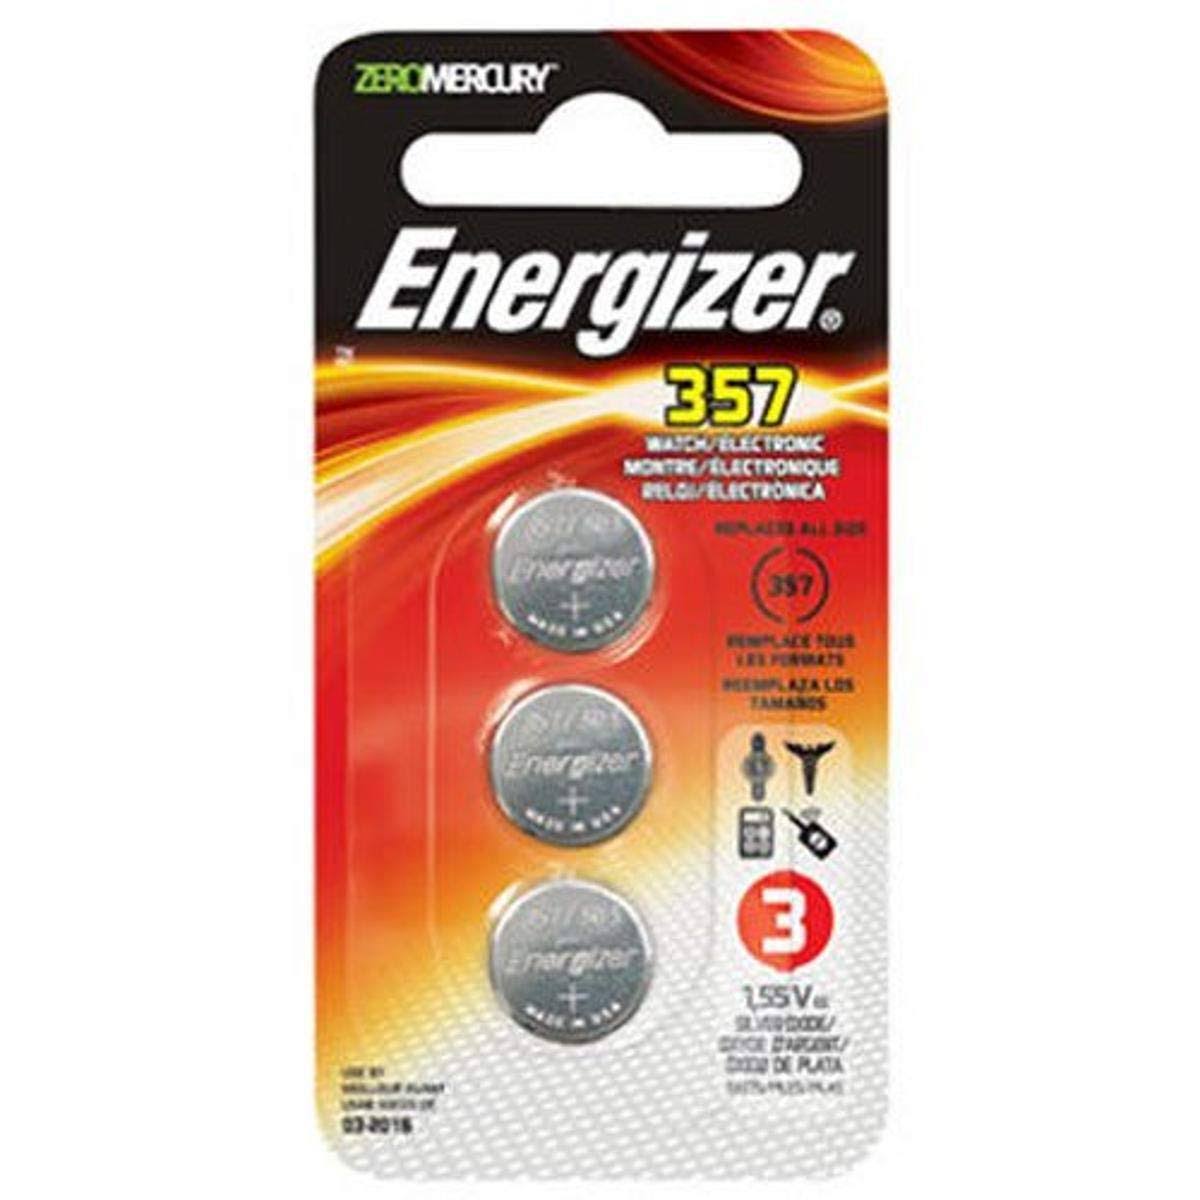 Energizer 357 Battery - 3V, x3